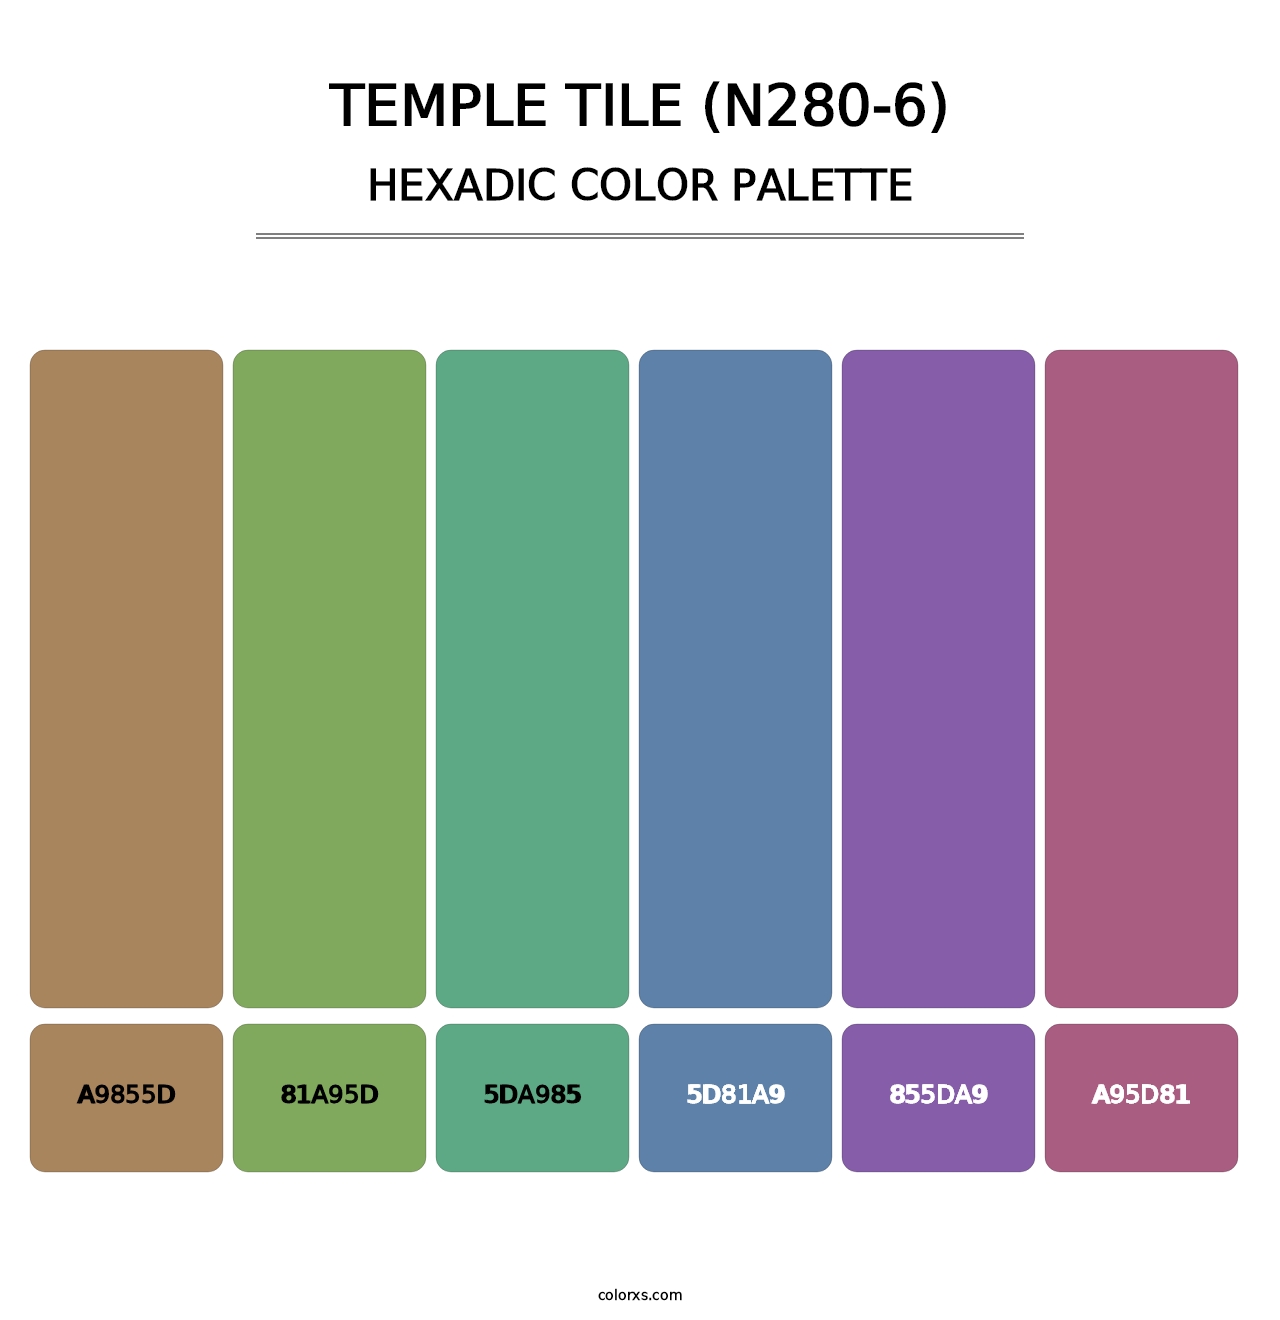 Temple Tile (N280-6) - Hexadic Color Palette